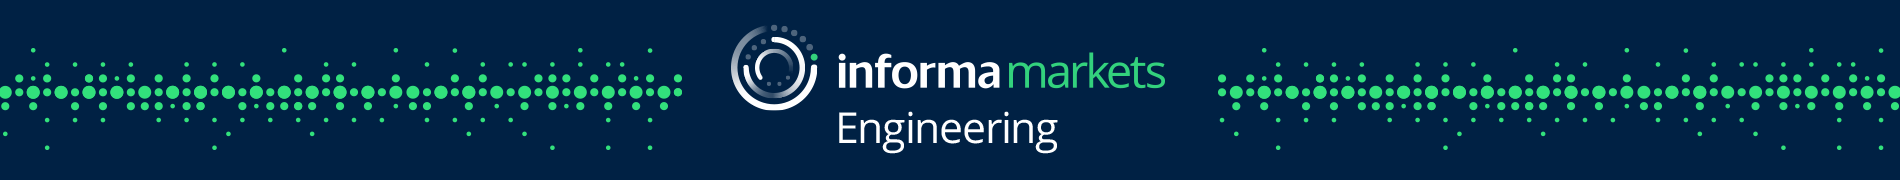 Informa Markets - Engineering